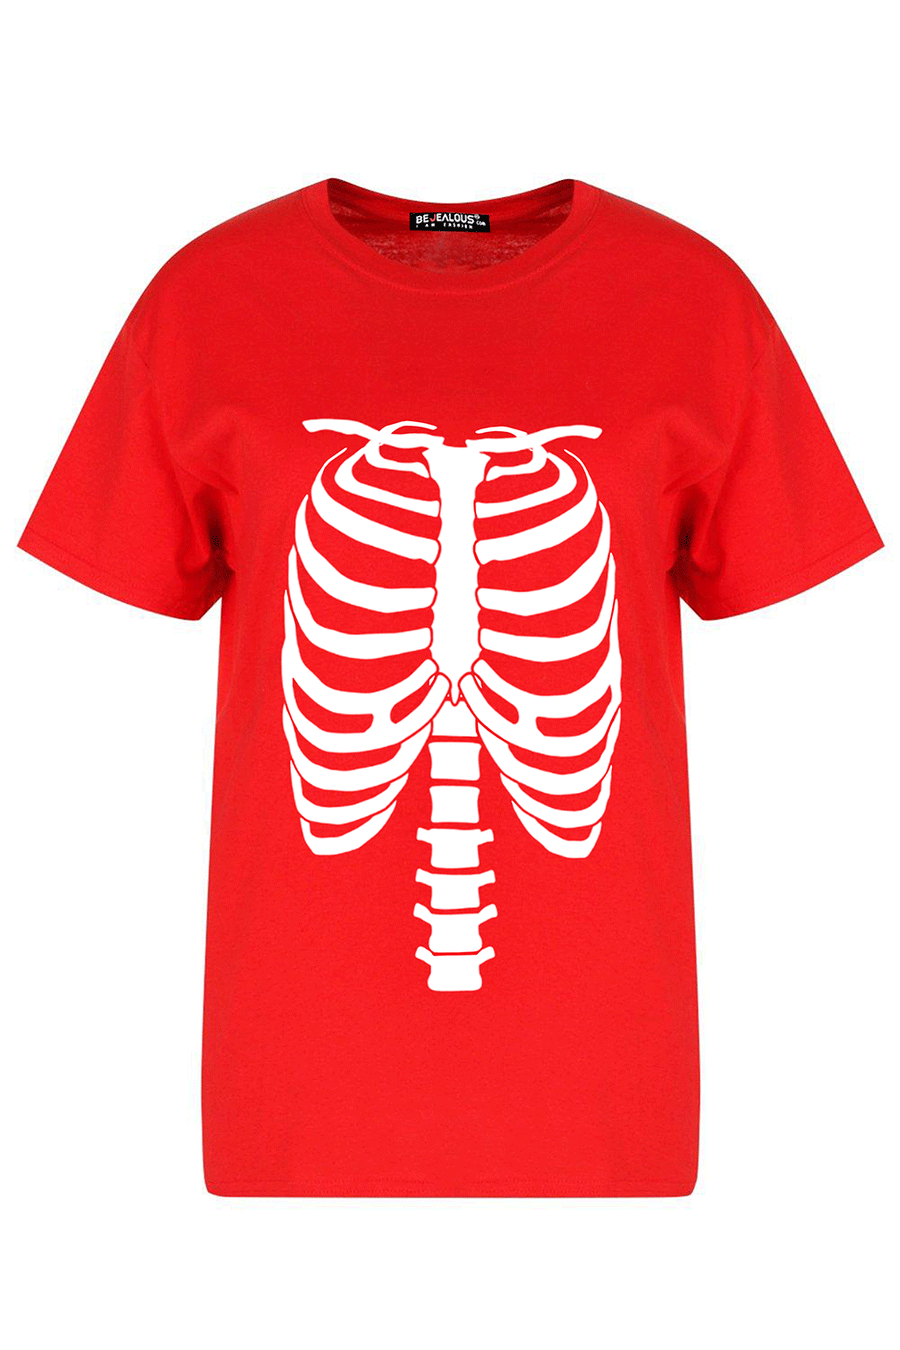 Grace Halloween Baggy Skeleton Costume T-Shirt